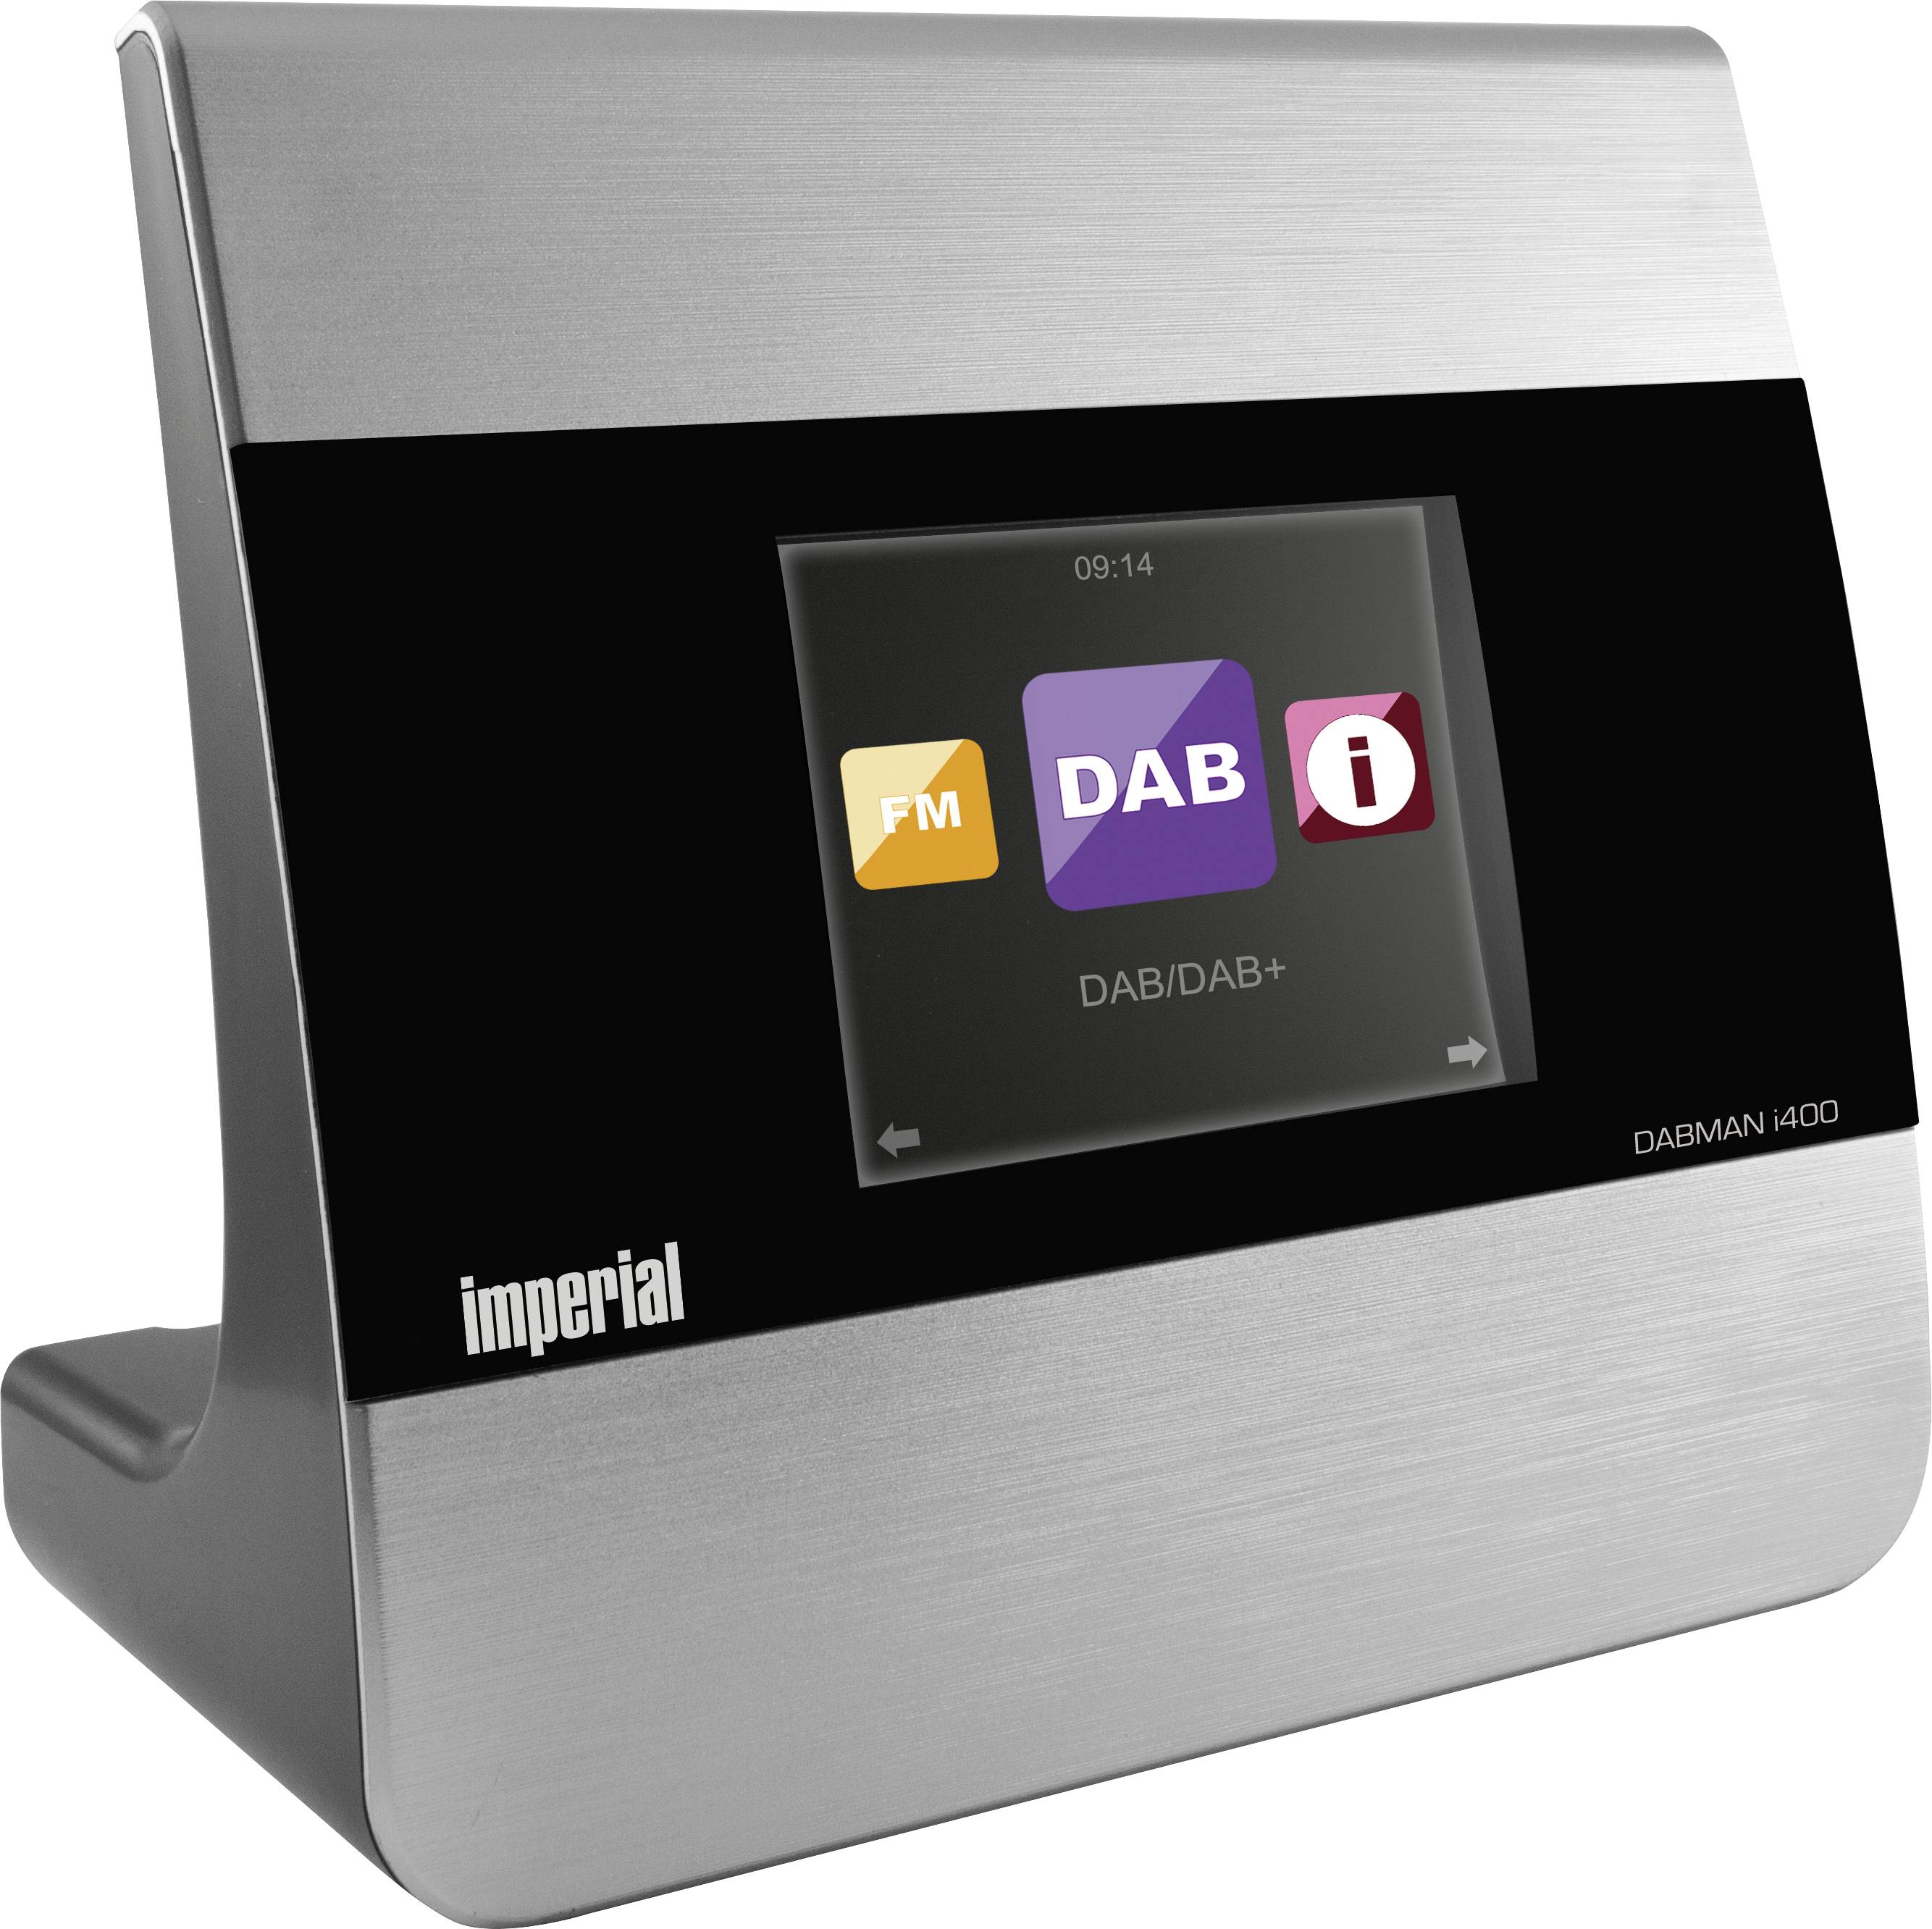 Imperial DABMAN i400 radio adapter DAB+, FM Bluetooth, DLNA, Wi-Fi, Internet DLNA-compatible, Multi-room | Conrad.com